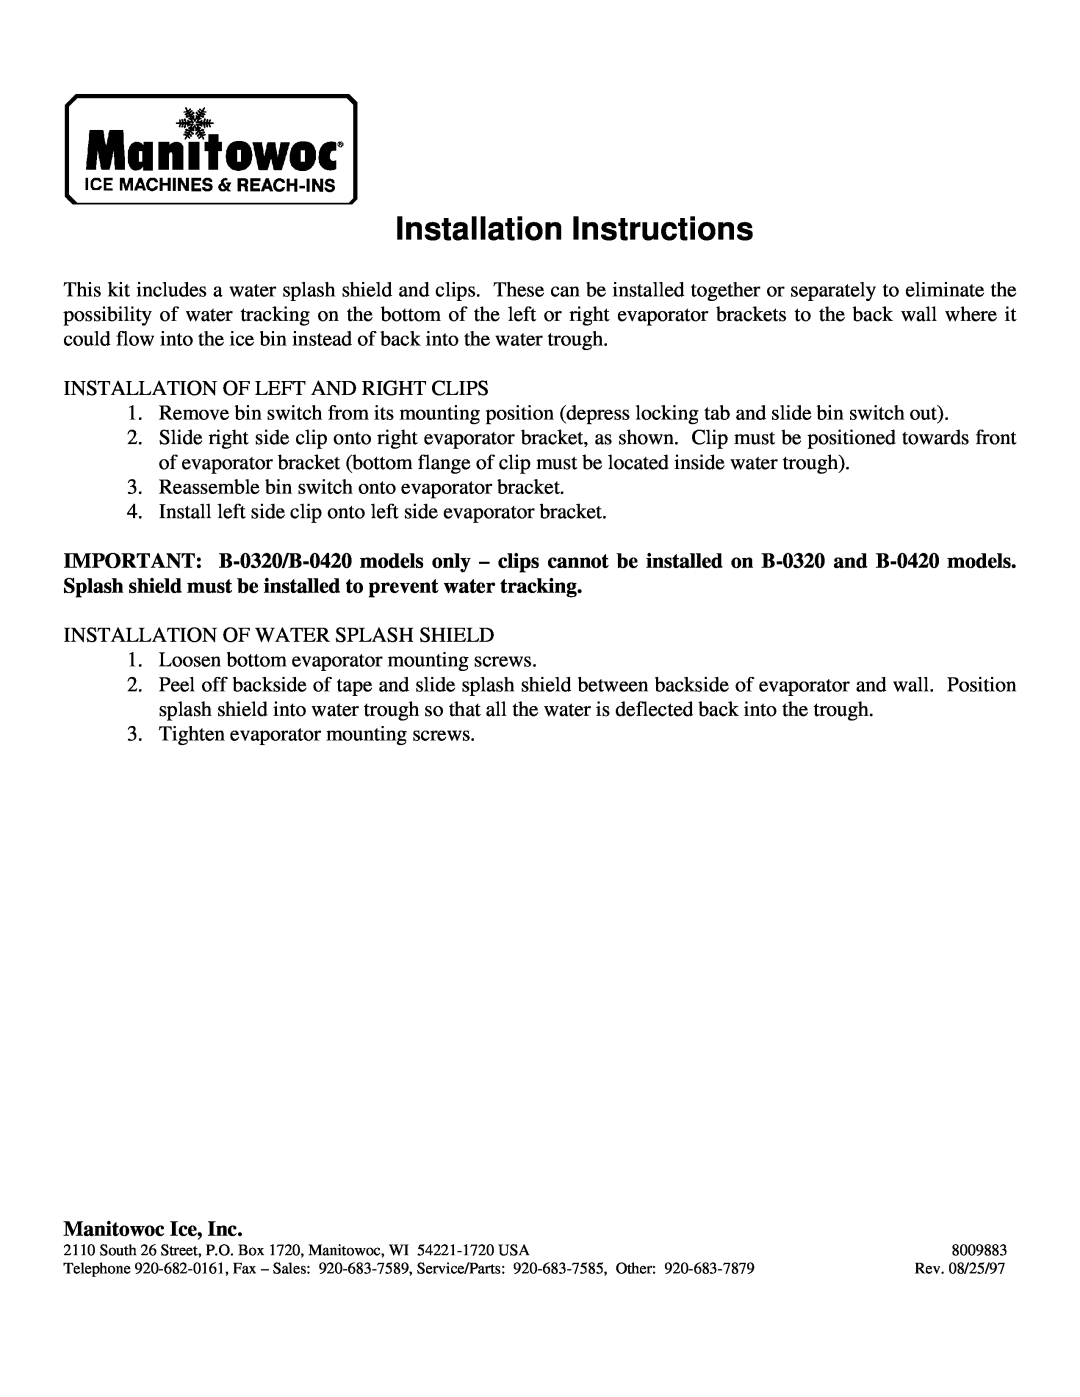 Manitowoc Ice B-0320, B-0420 installation instructions Installation Instructions, Manitowoc Ice, Inc 